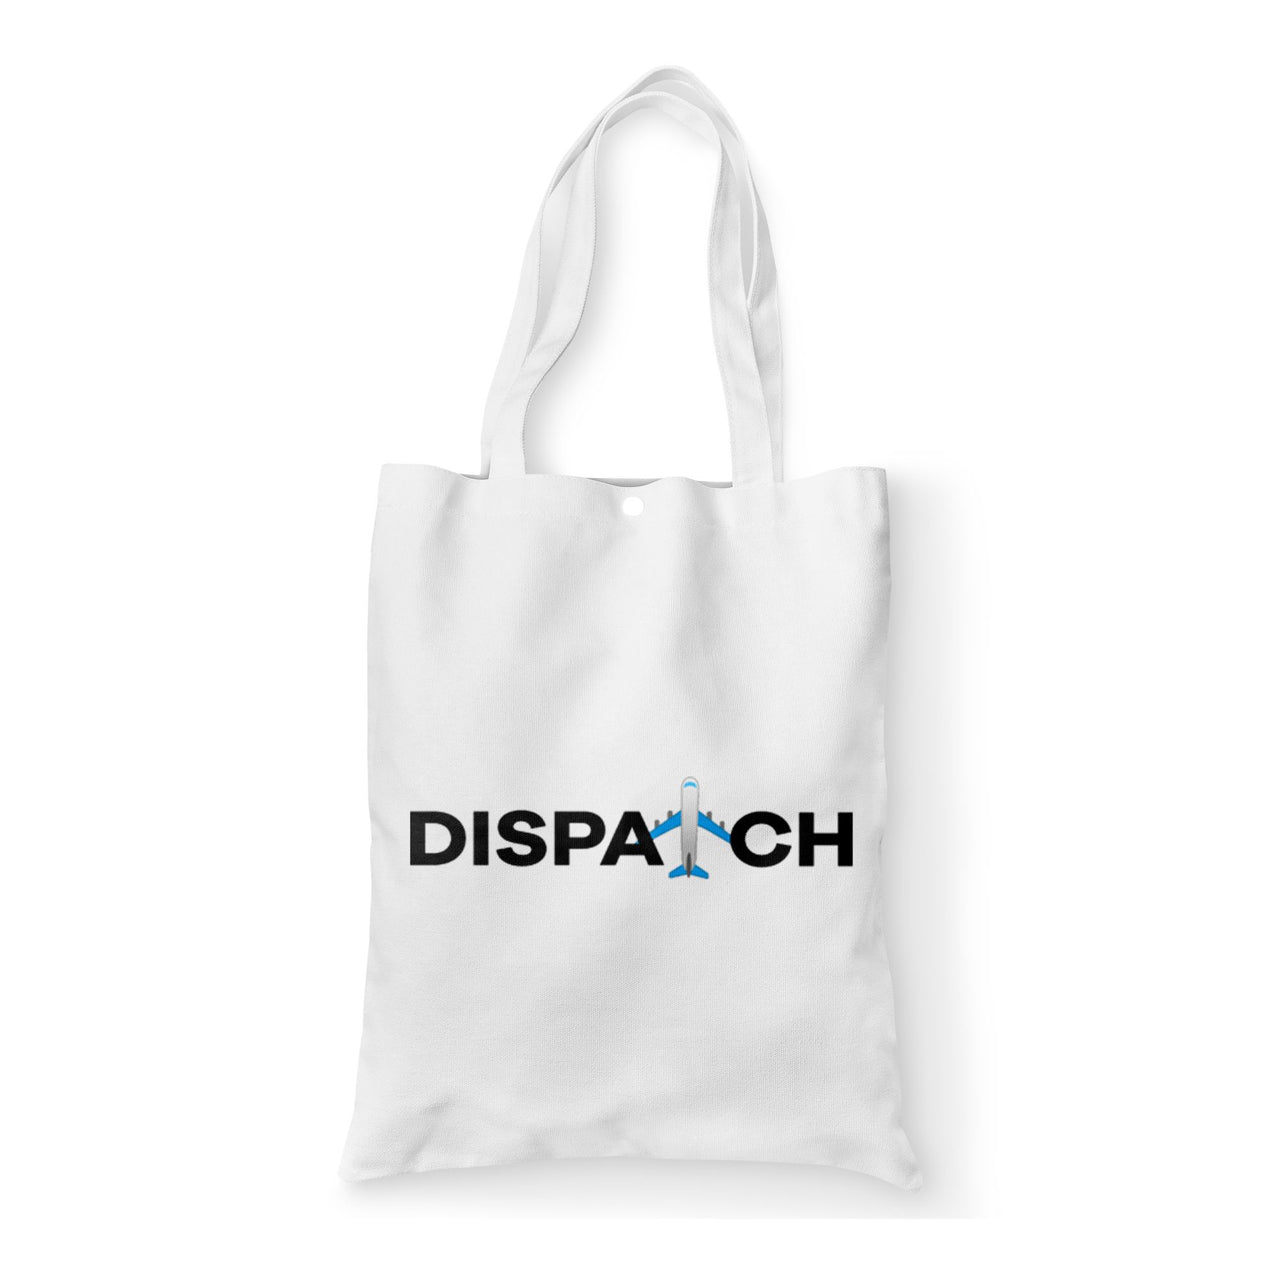 Dispatch Designed Tote Bags